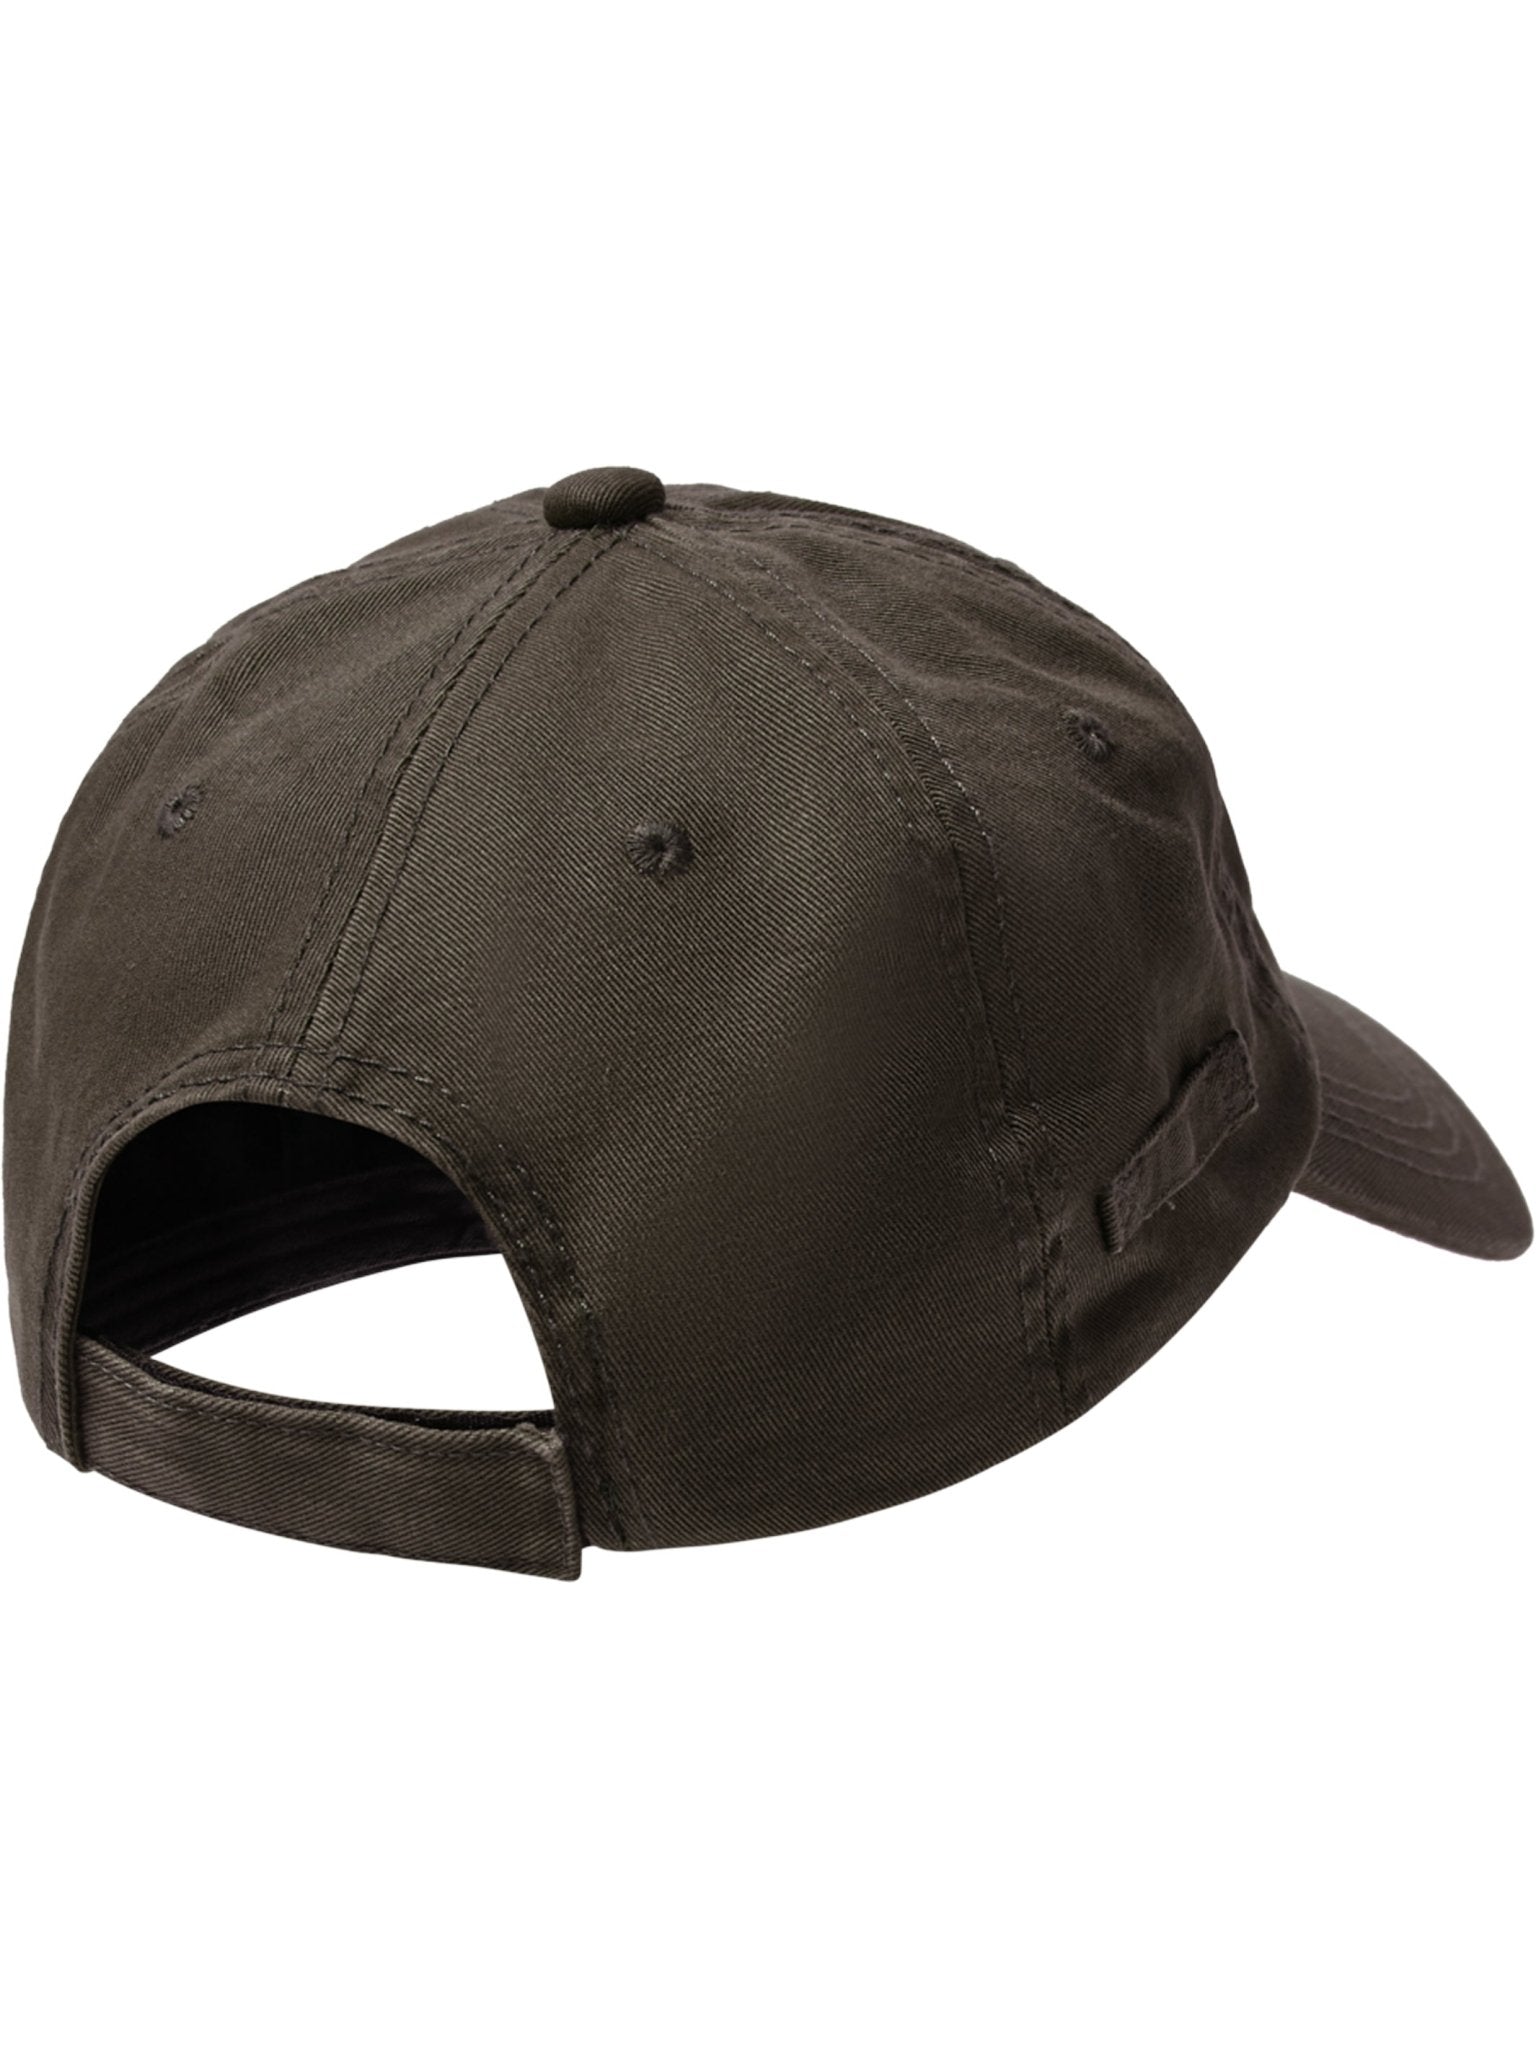 4elementsclothingDeerhunterDeerhunter - Balaton Shield Cap - Adult adjustable Baseball Cap / peaked cap / hatHats6091-999